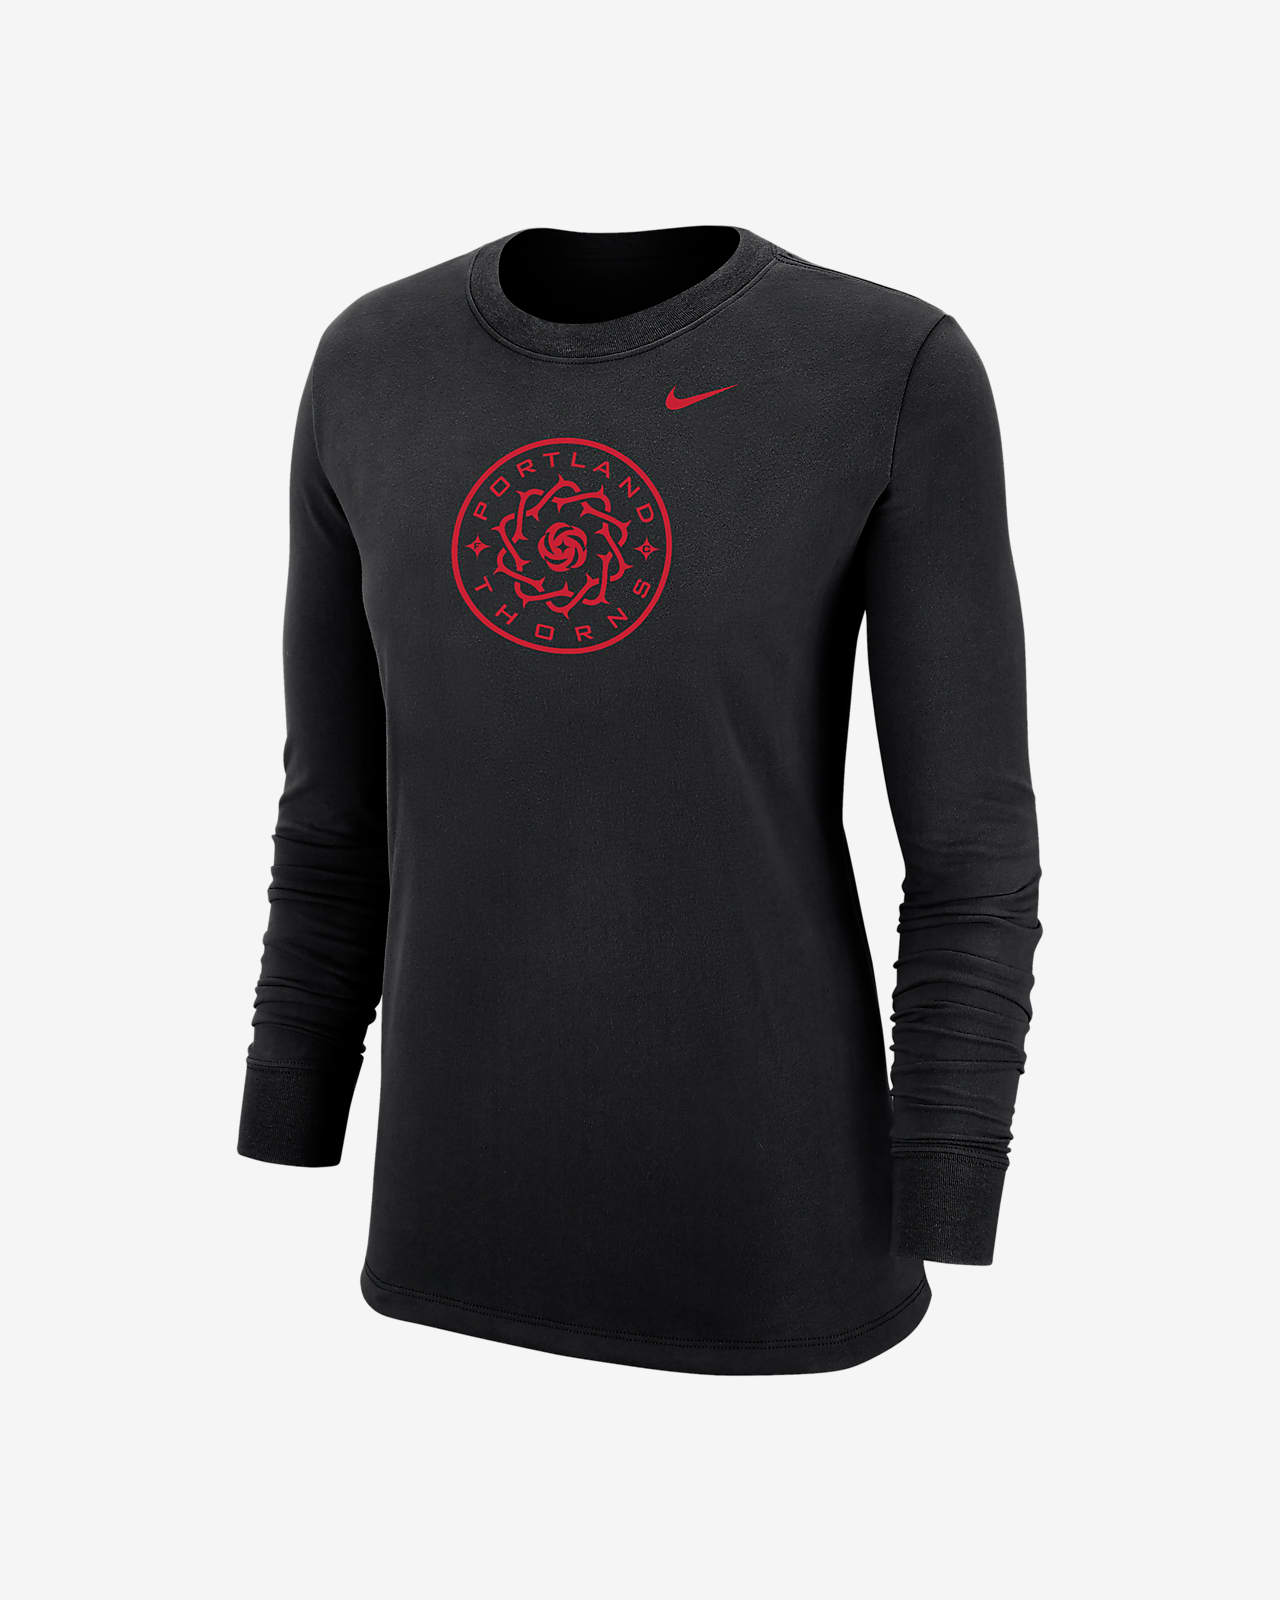 Portland Thorns Women's Nike Soccer Long-Sleeve T-Shirt